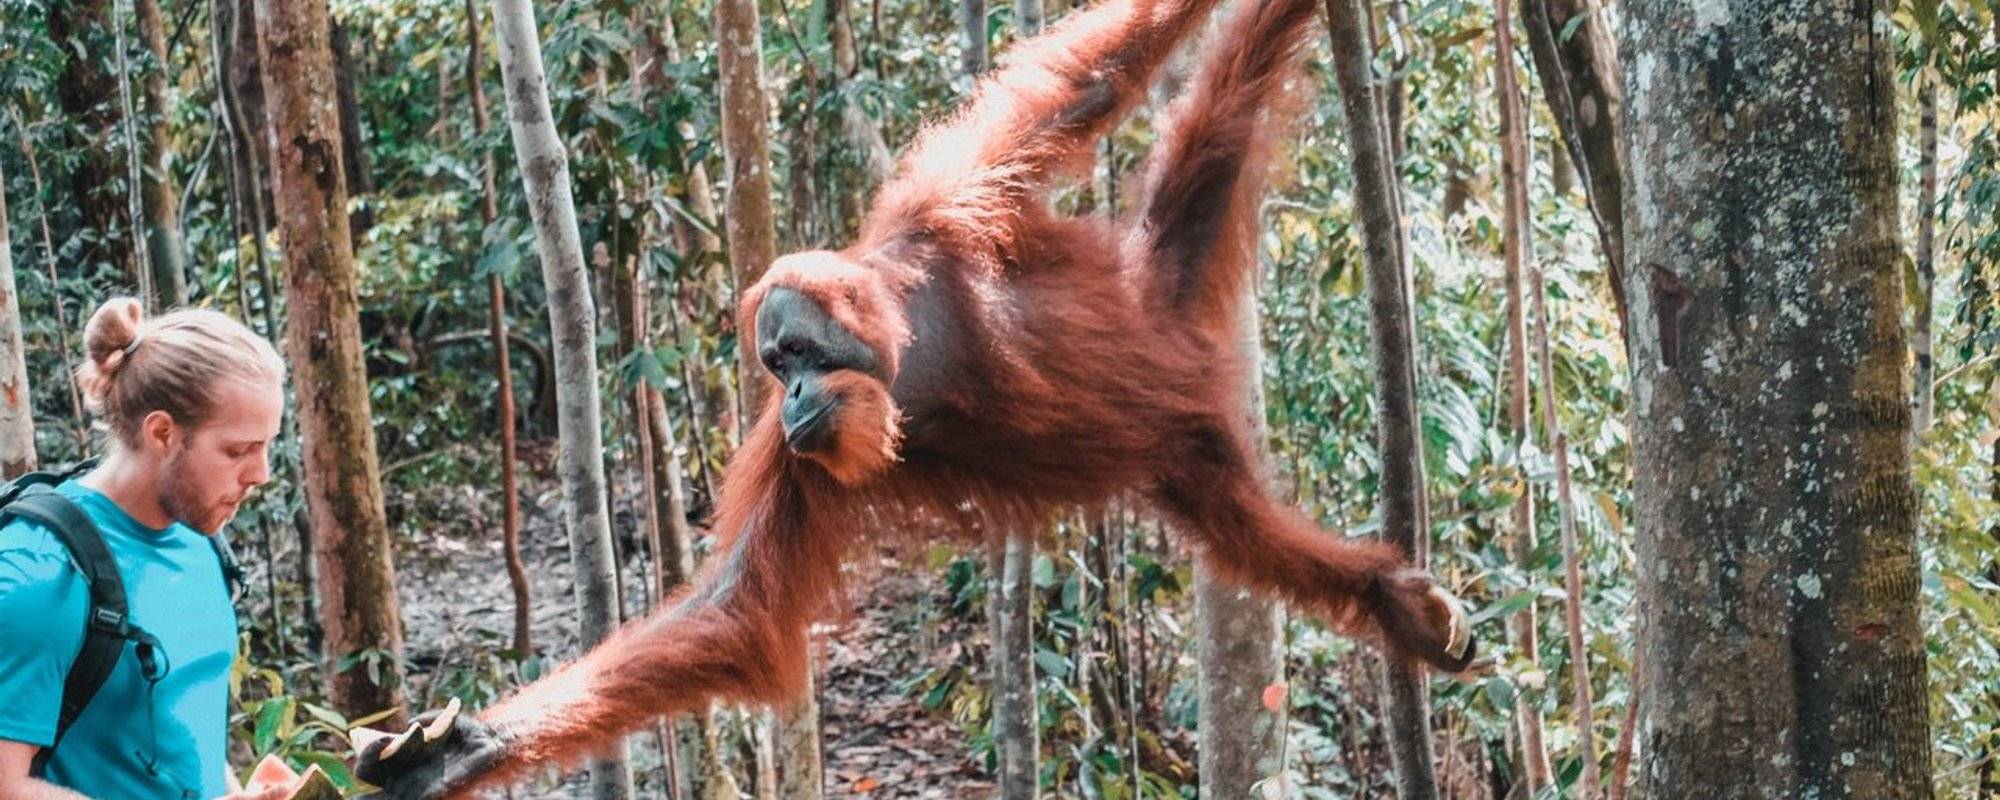 Visiting the Orangutan in Sumatra